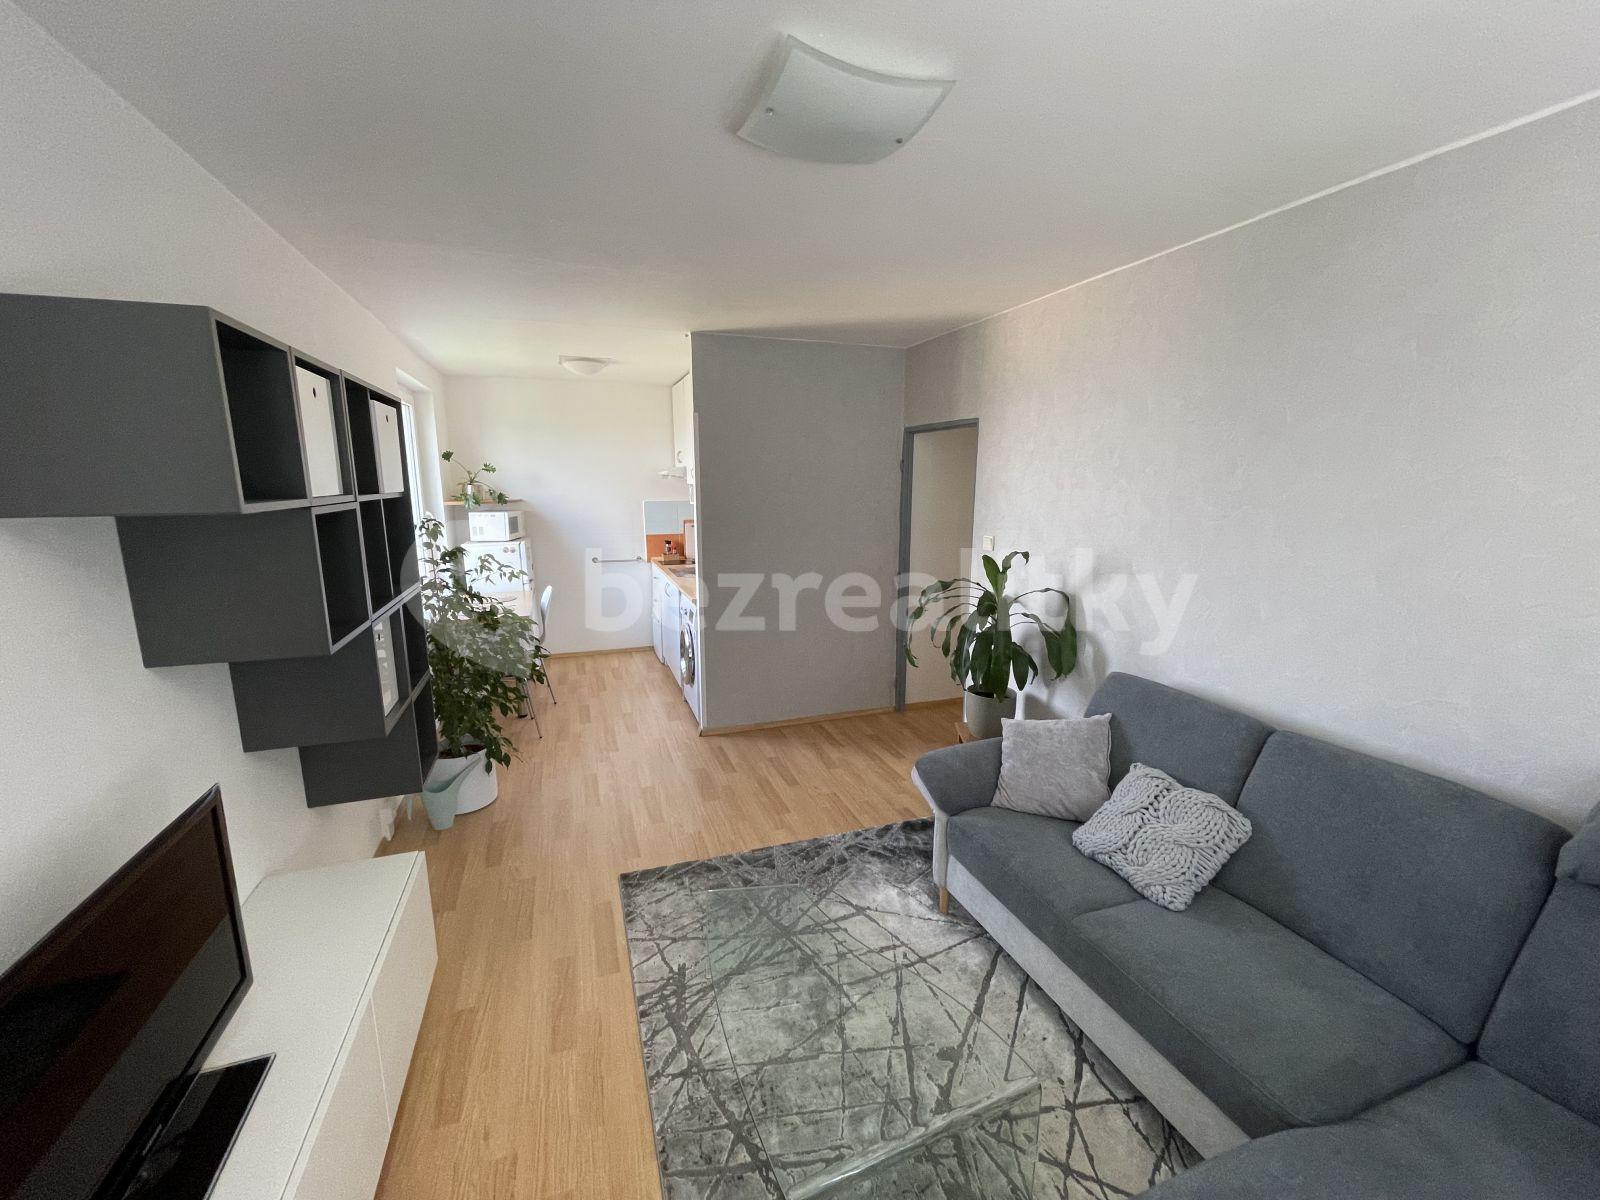 1 bedroom with open-plan kitchen flat to rent, 43 m², Prague, Prague